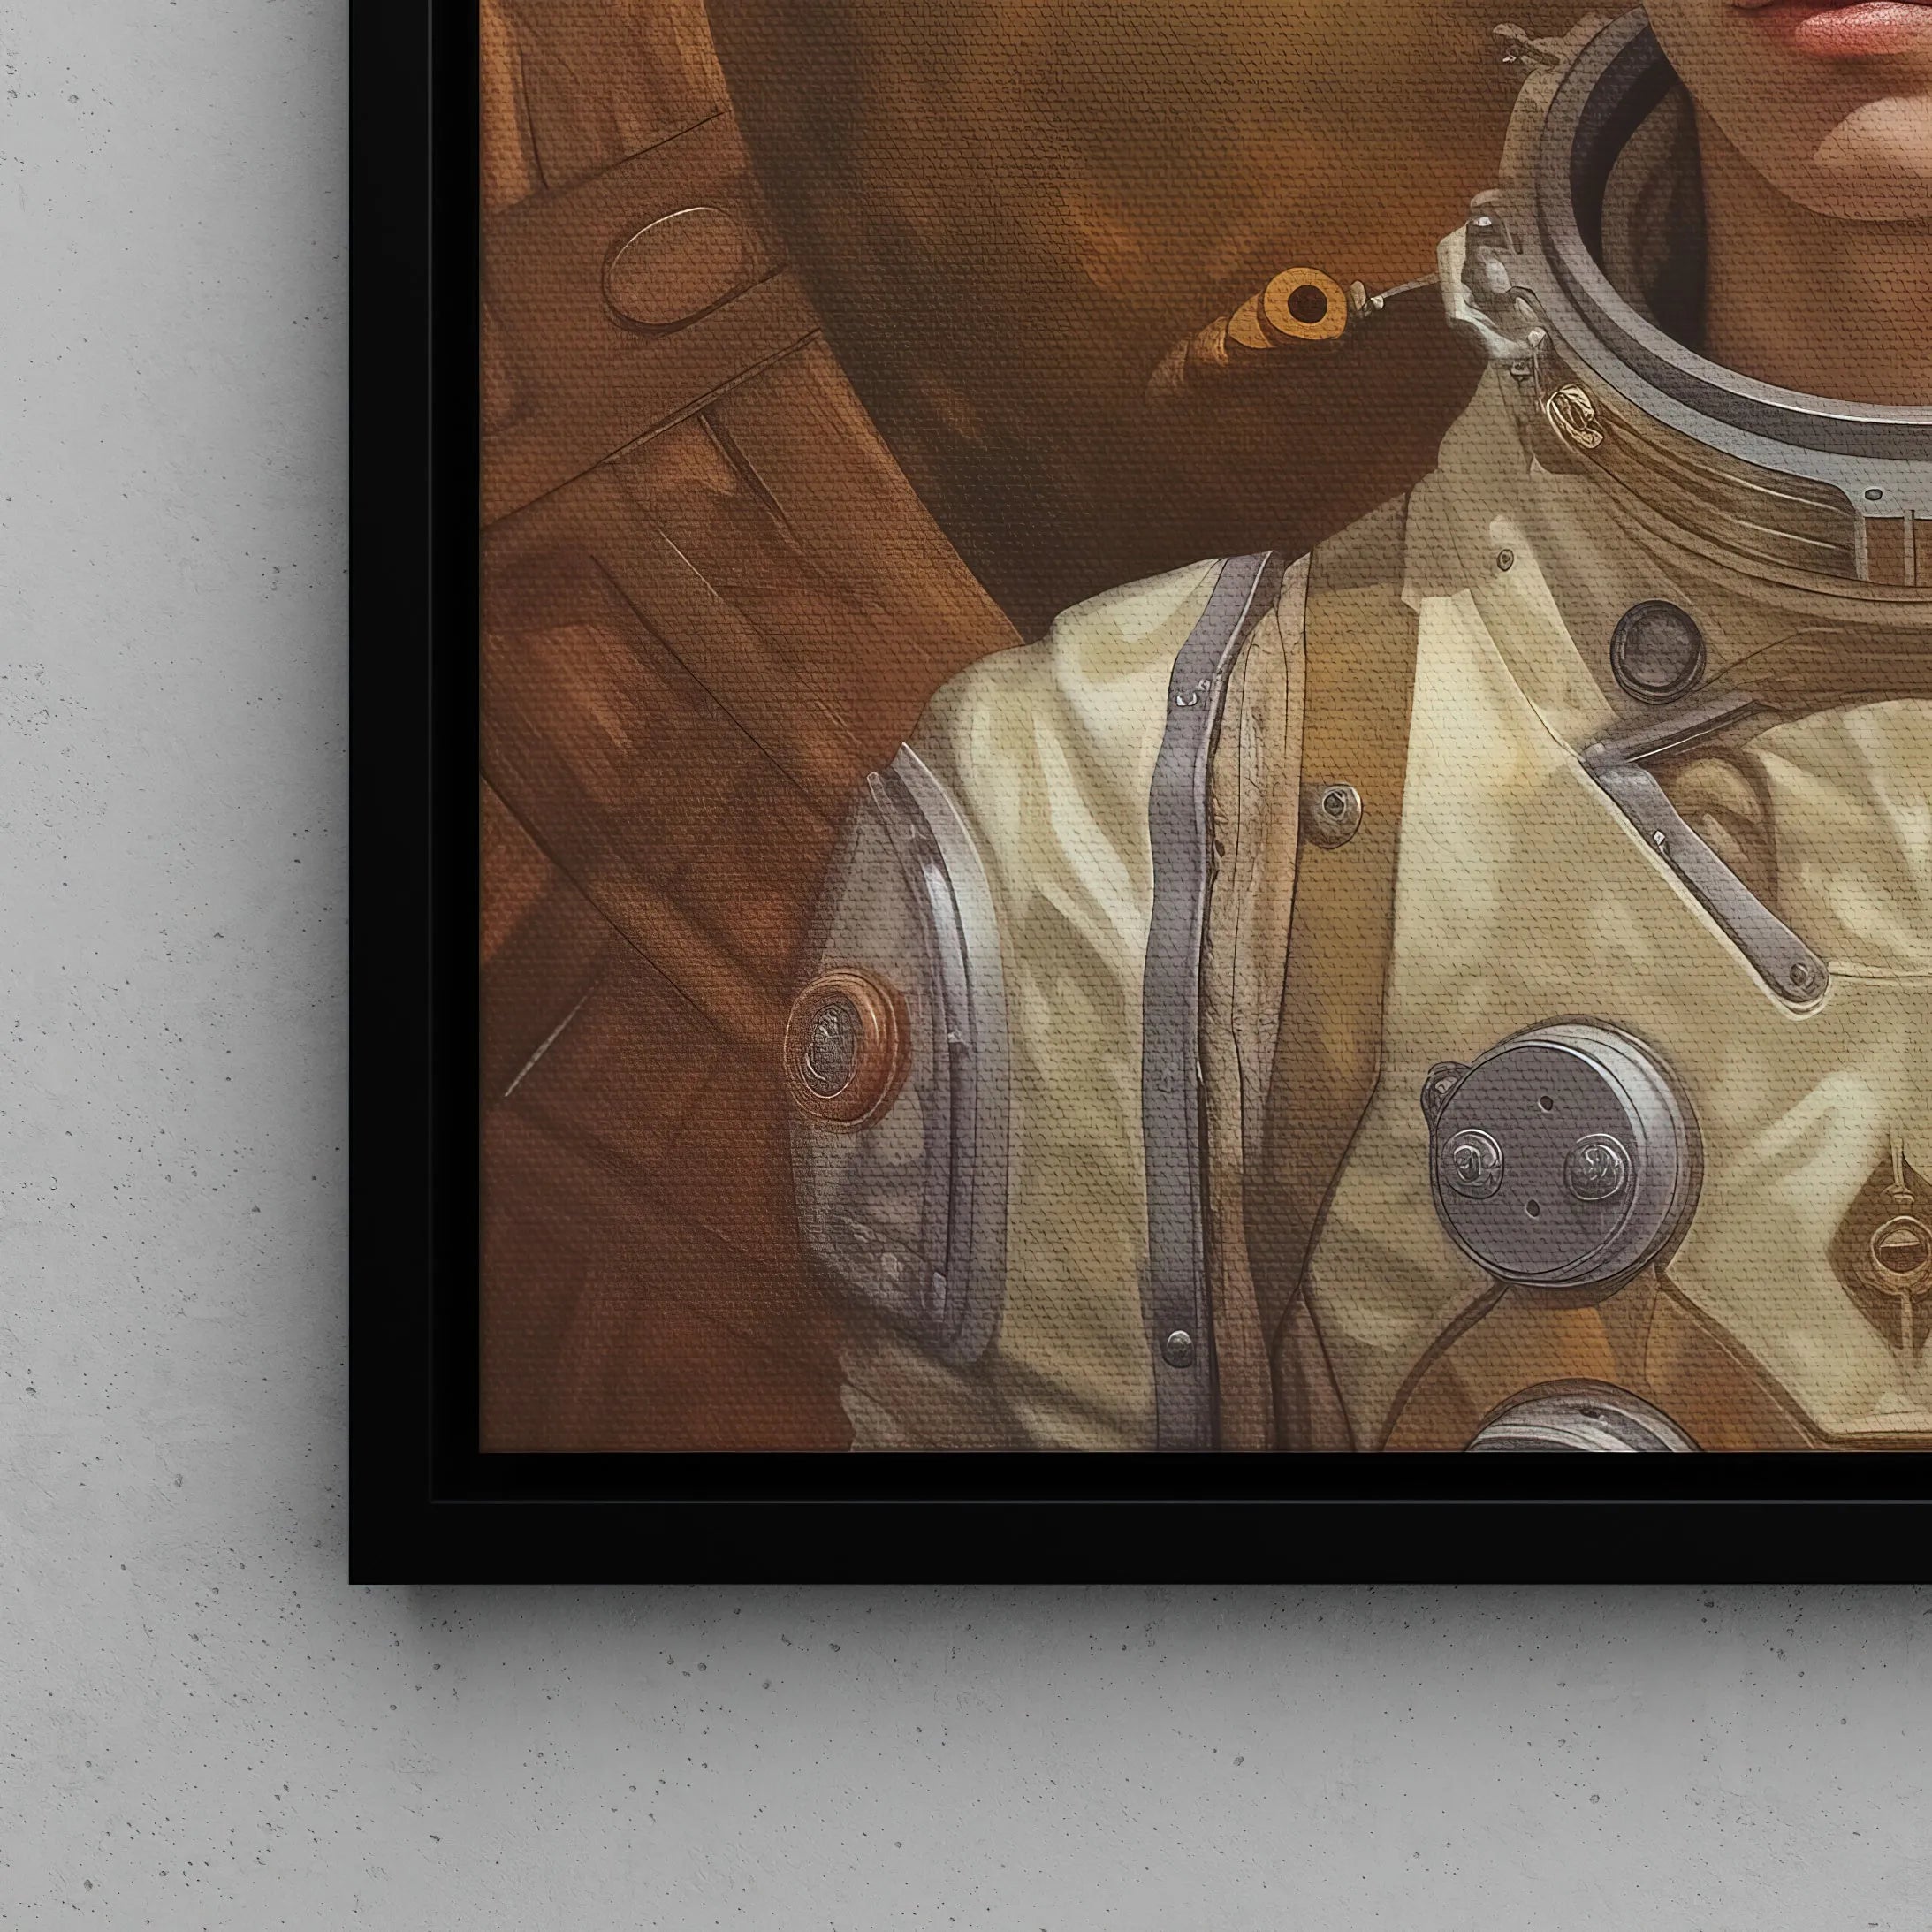 Noah The Gay Astronaut Art Print - Lgbtq Framed Canvas - Posters Prints & Visual Artwork - Aesthetic Art